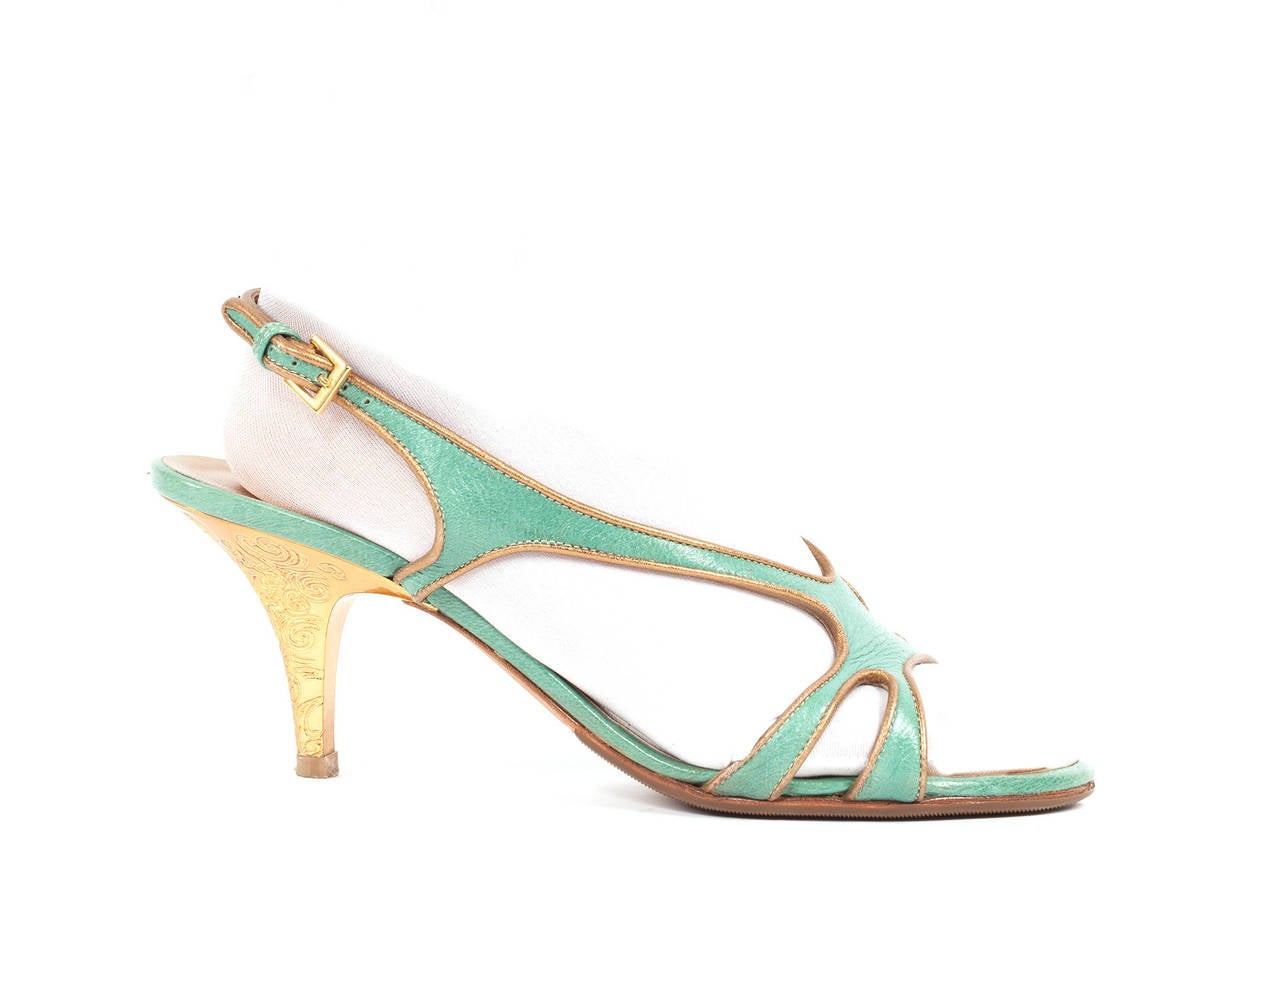 Escada Celadon green sling back heels with gold interior, Sz. 8.5 For Sale 1